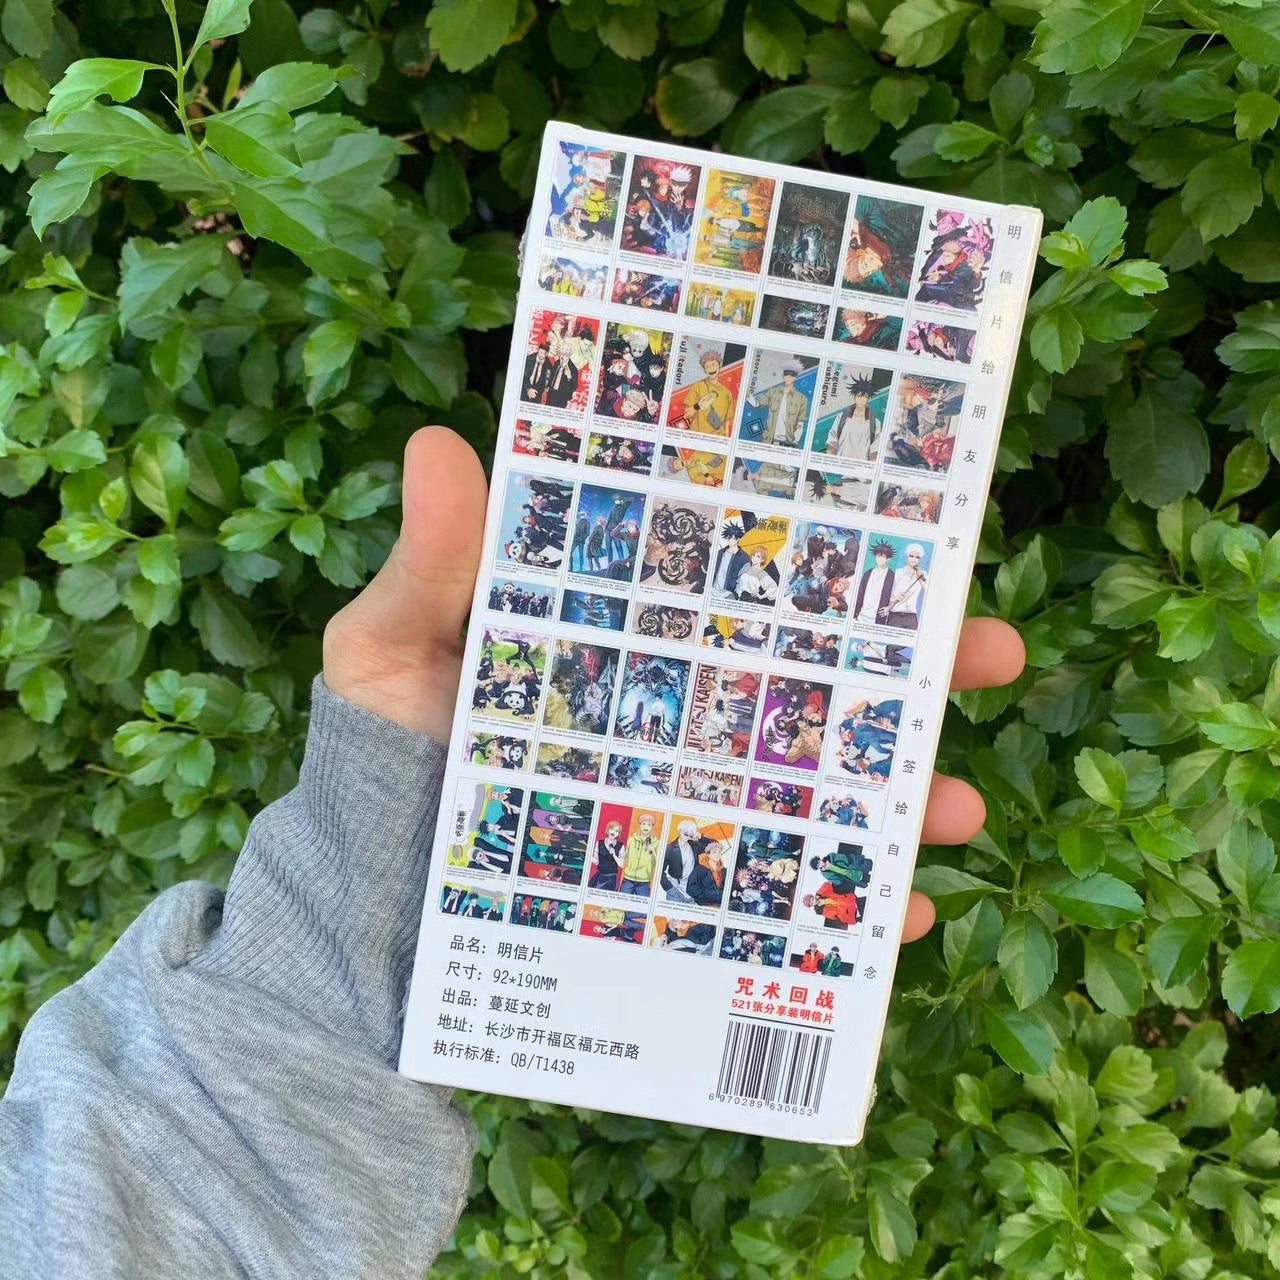 Pack Anime de 30 cartes postales, 30 photocards et 60 stickers - One piece, Jujutsu Kaisen, Spy x Family